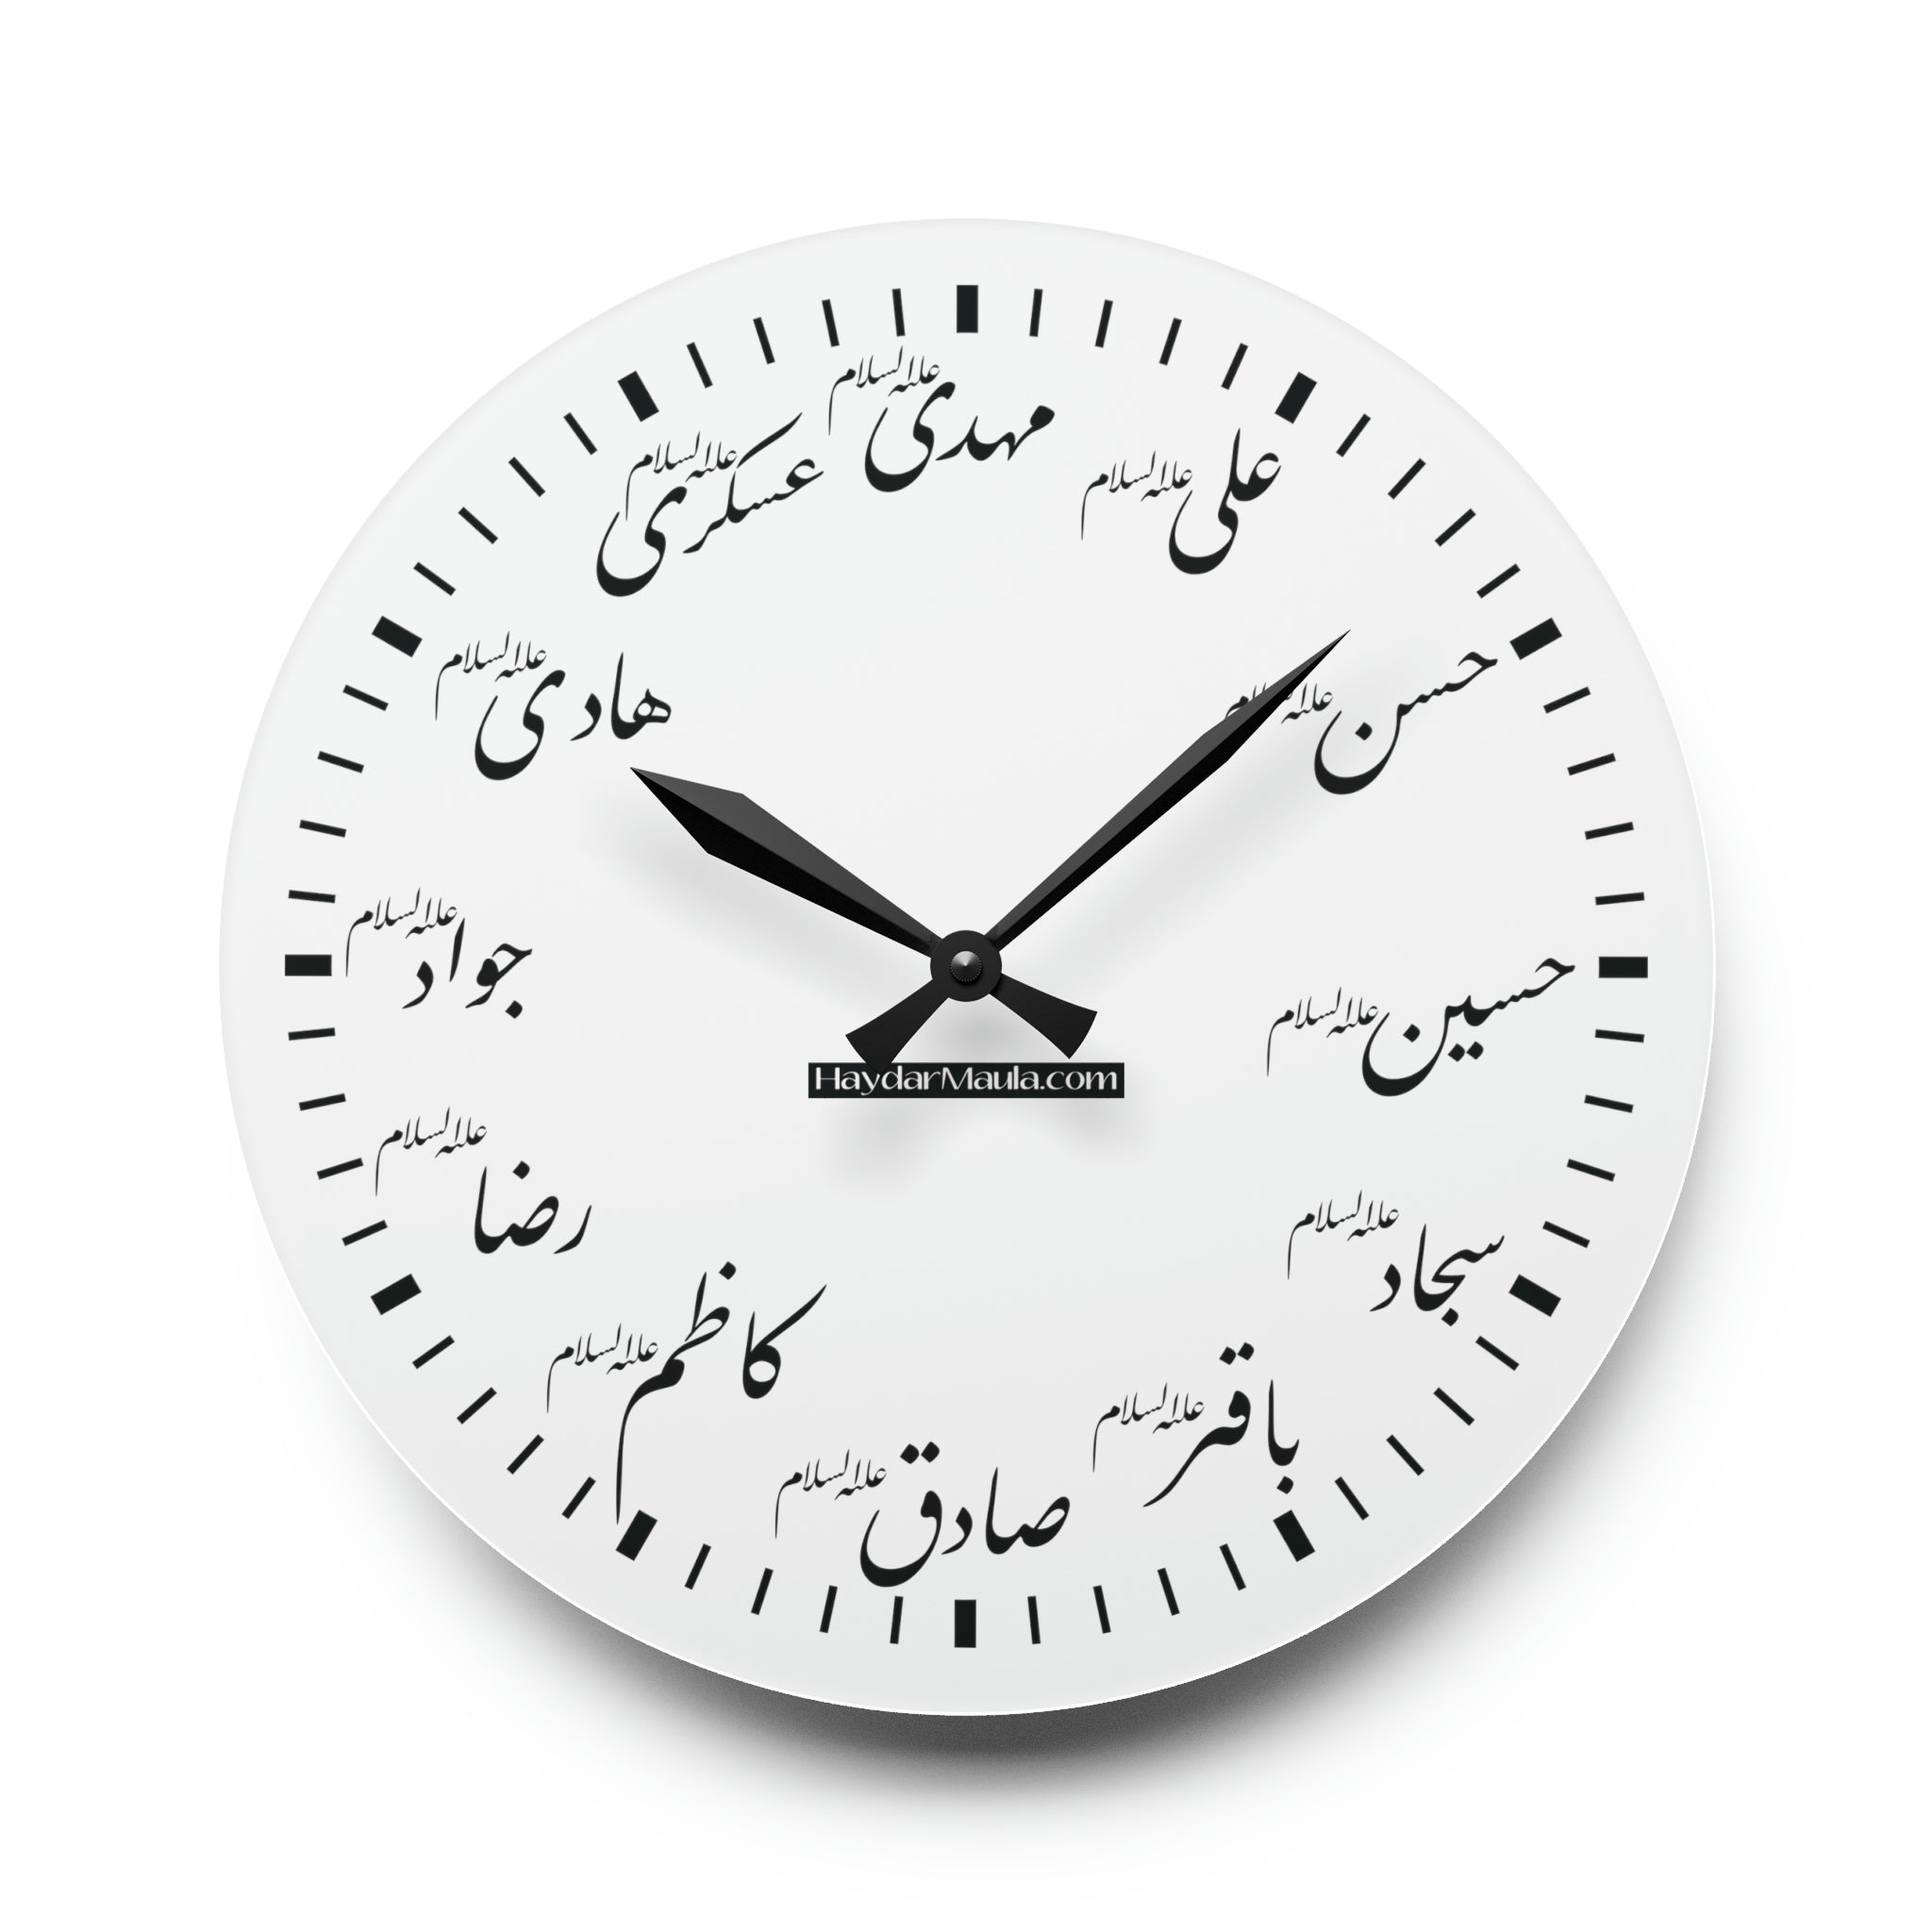 14 Massumeen (as) Arabic Names - Acrylic Wall Clock - Shia Islamic Ahlulbayt, Ya Mahdi, 313, Ima Ali (as), Ashura, Karbala